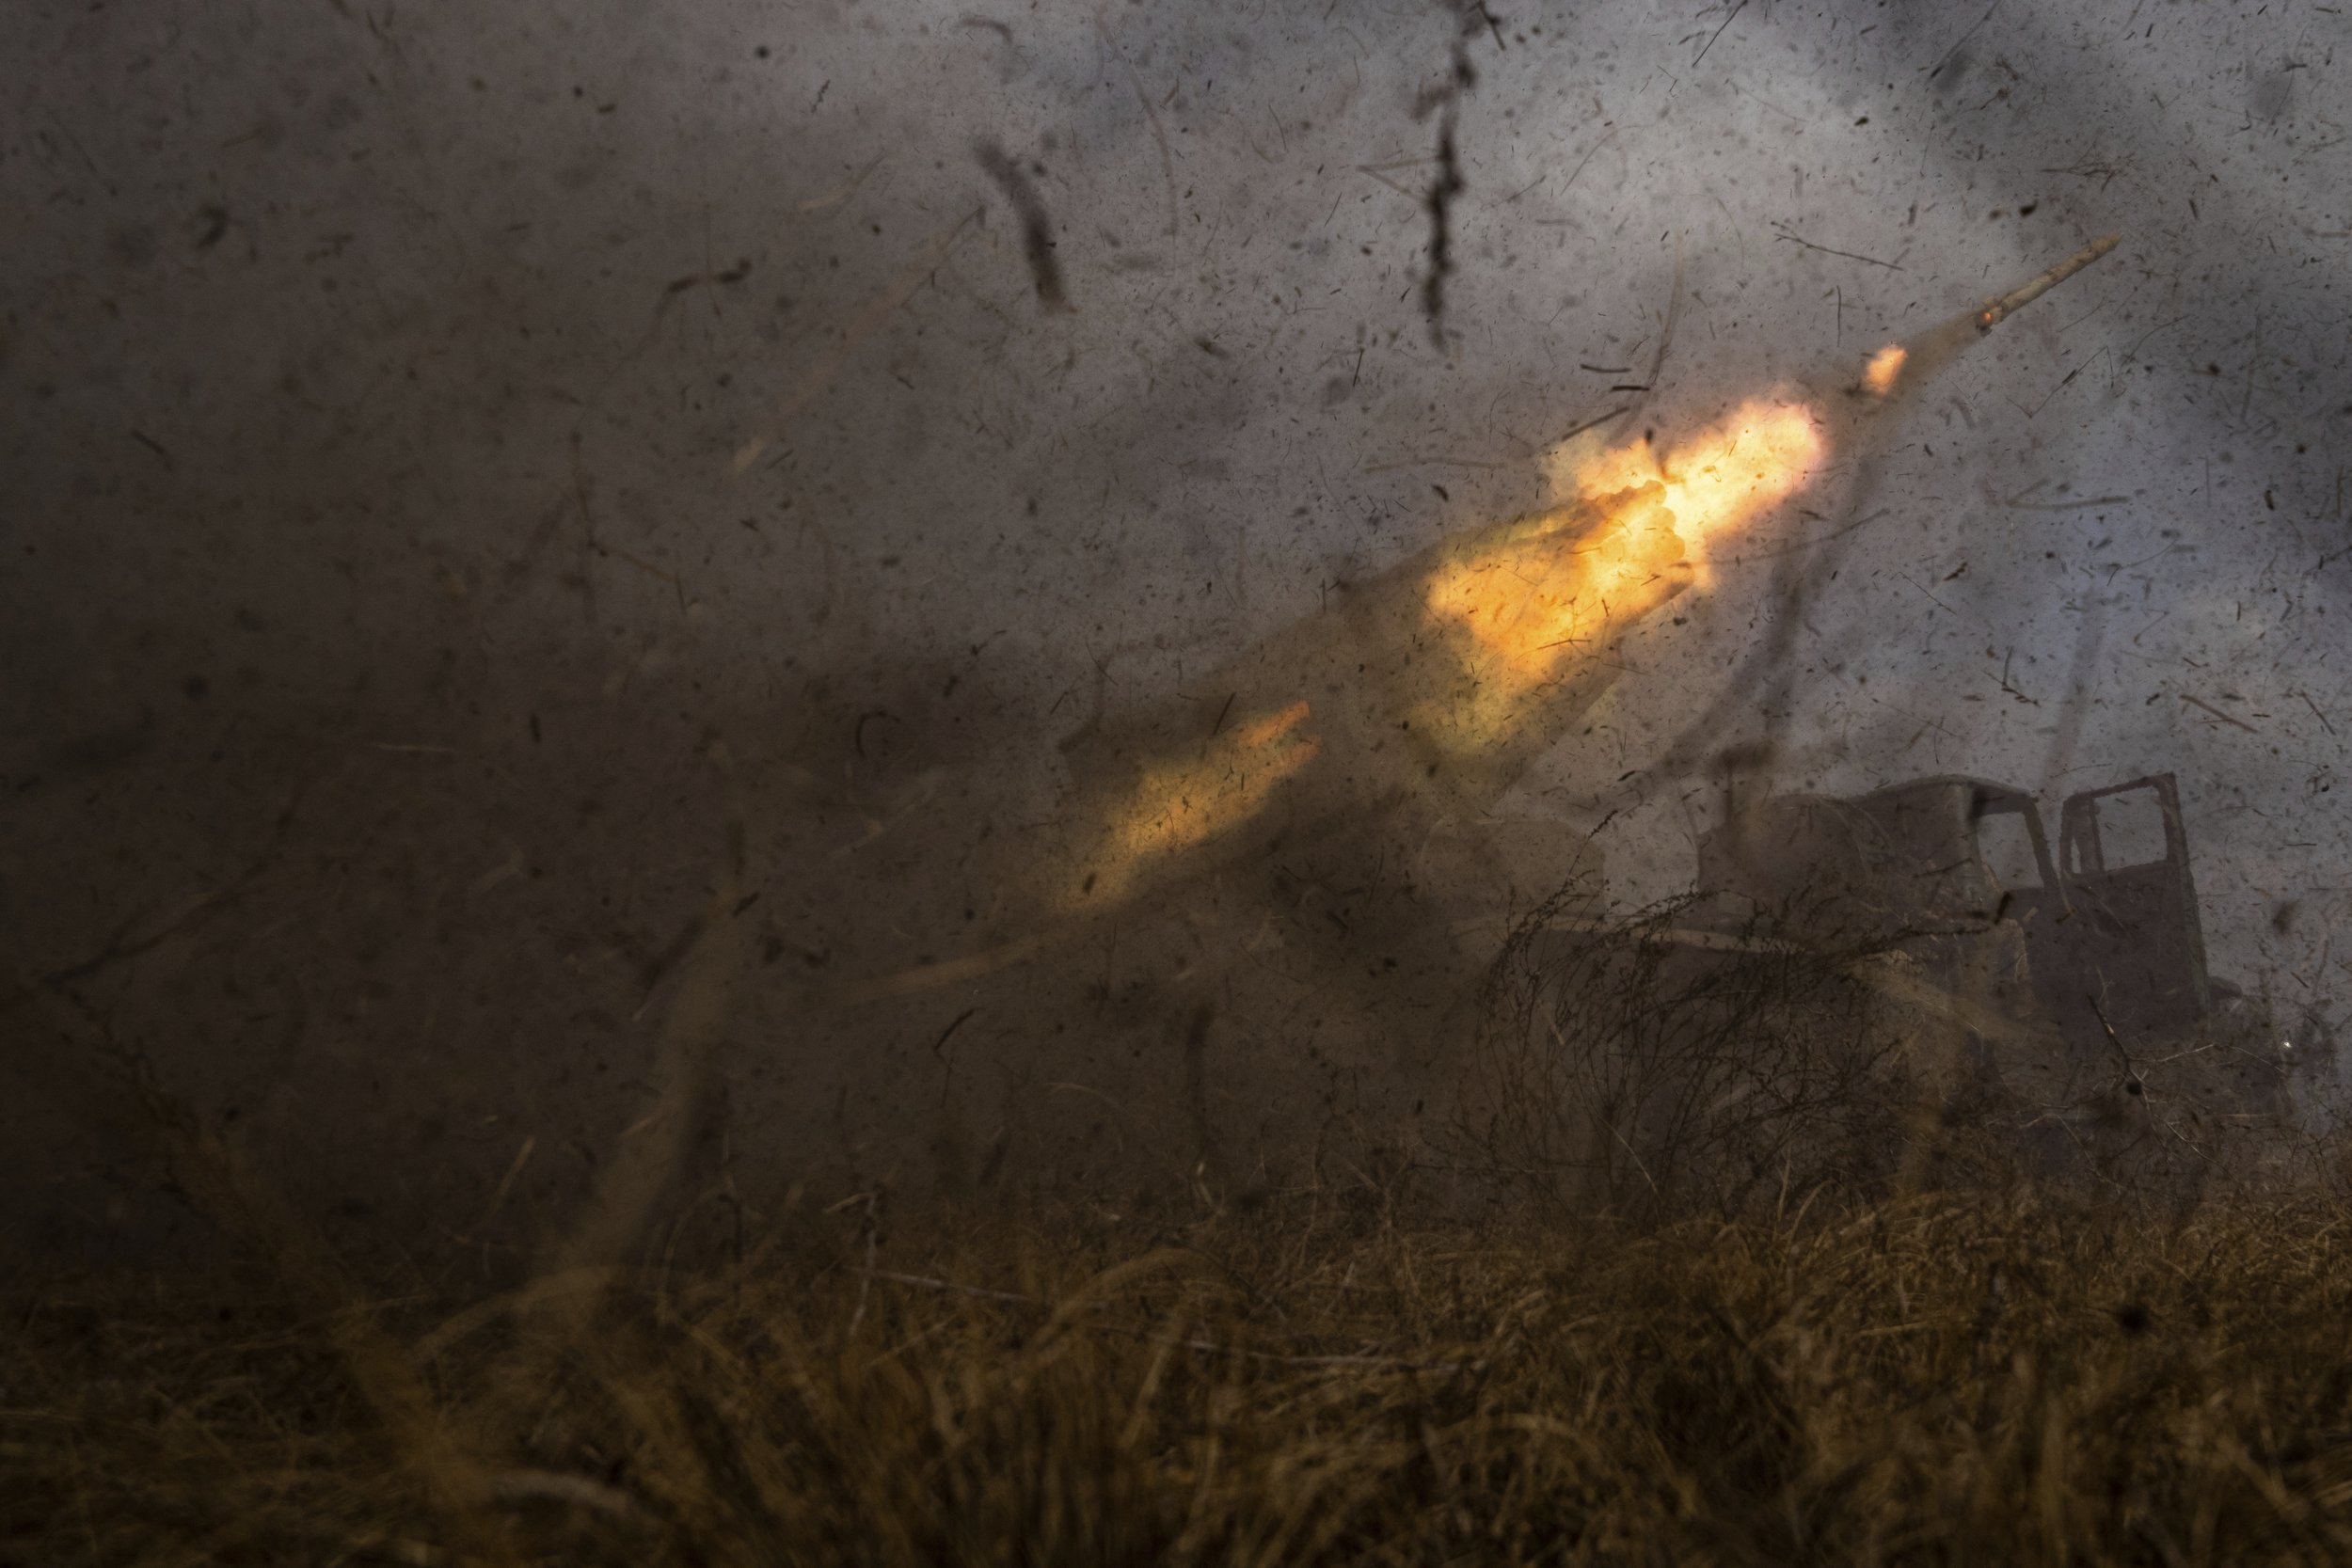  A Ukrainian MSLR BM-21 "Grad" rocket launcher of the 95 Air Assault brigade fires toward Russian positions at the frontline near Kreminna, Ukraine, on March 9, 2023. (AP Photo/Evgeniy Maloletka) 